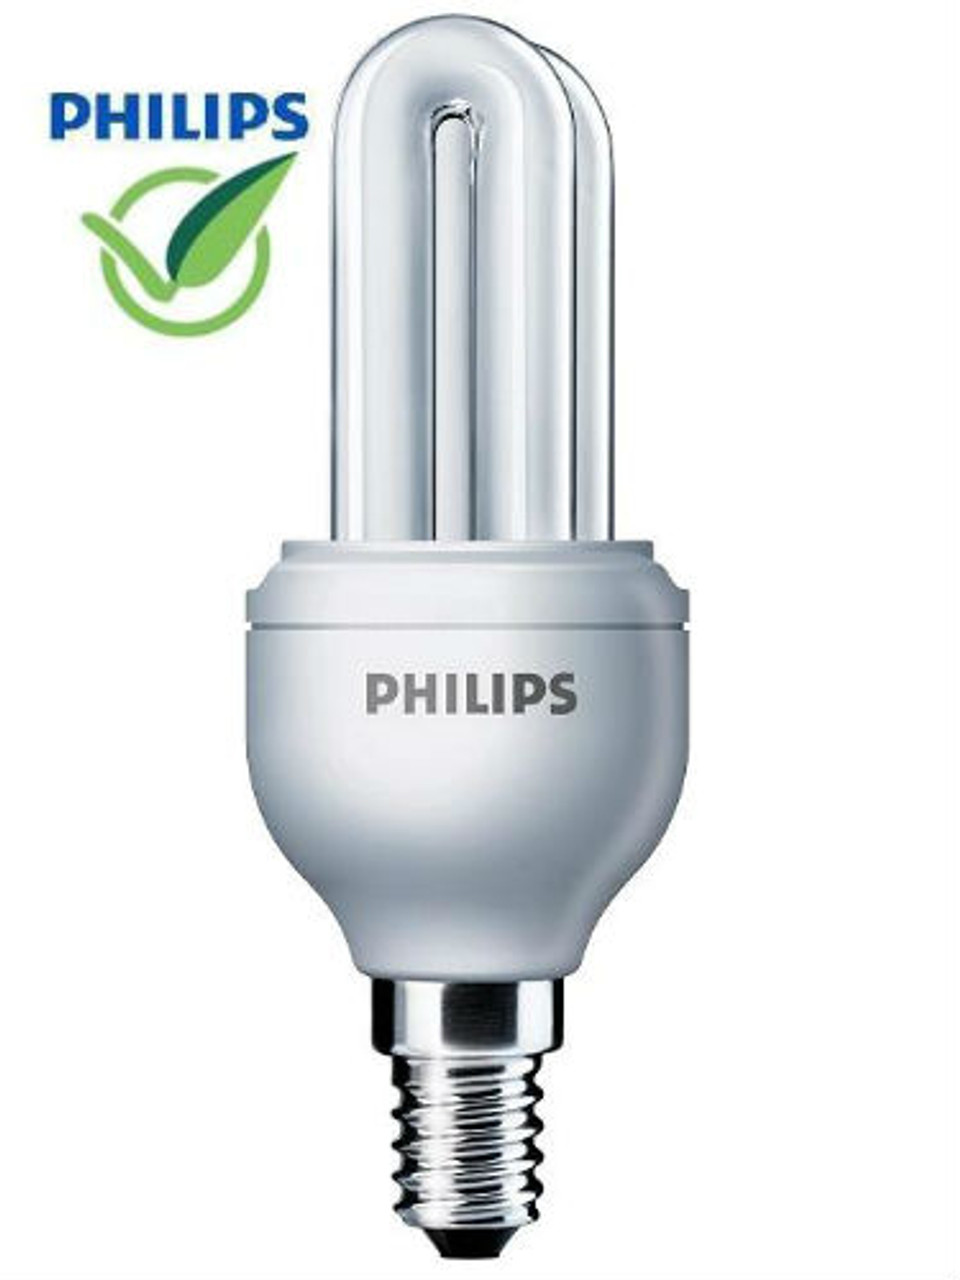 Philips 220-240V 11W E27 Energy saving Compact Fluorescent Stick Lamp